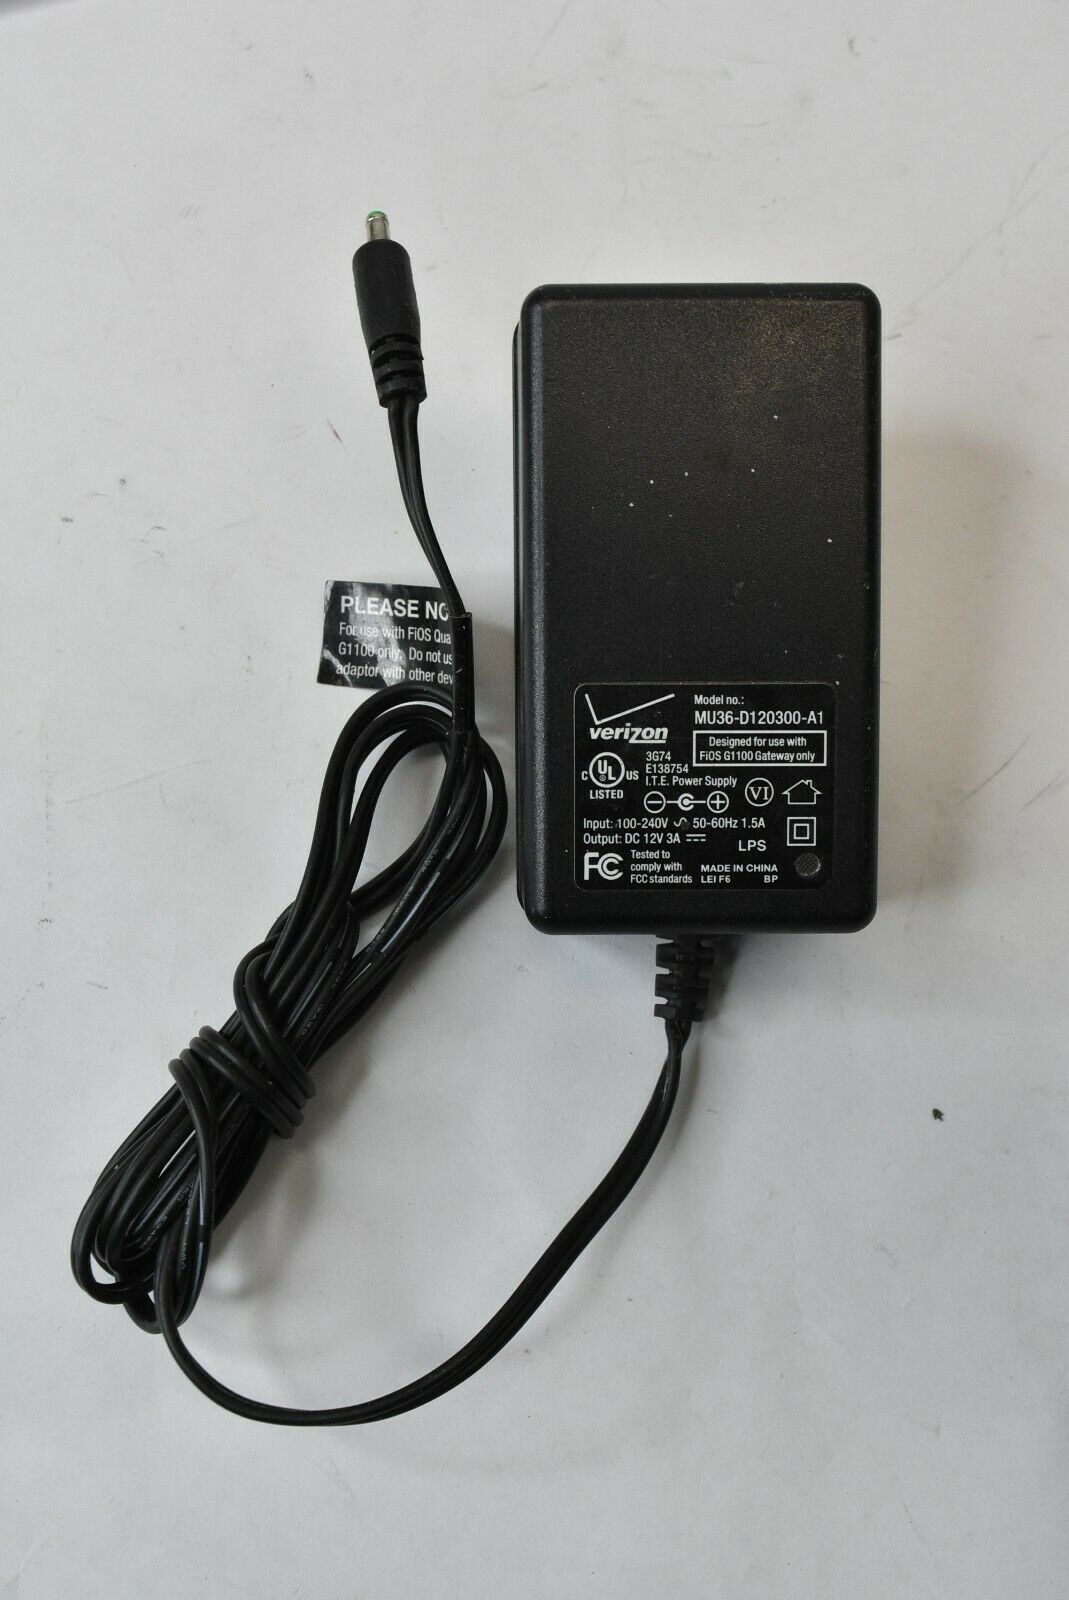 Verizon G1100 Power Supply Adapter Unit 12V 3A MU36-D120300-A1 Brand: Verizon UPC: Does not apply model no:MU36-D1203